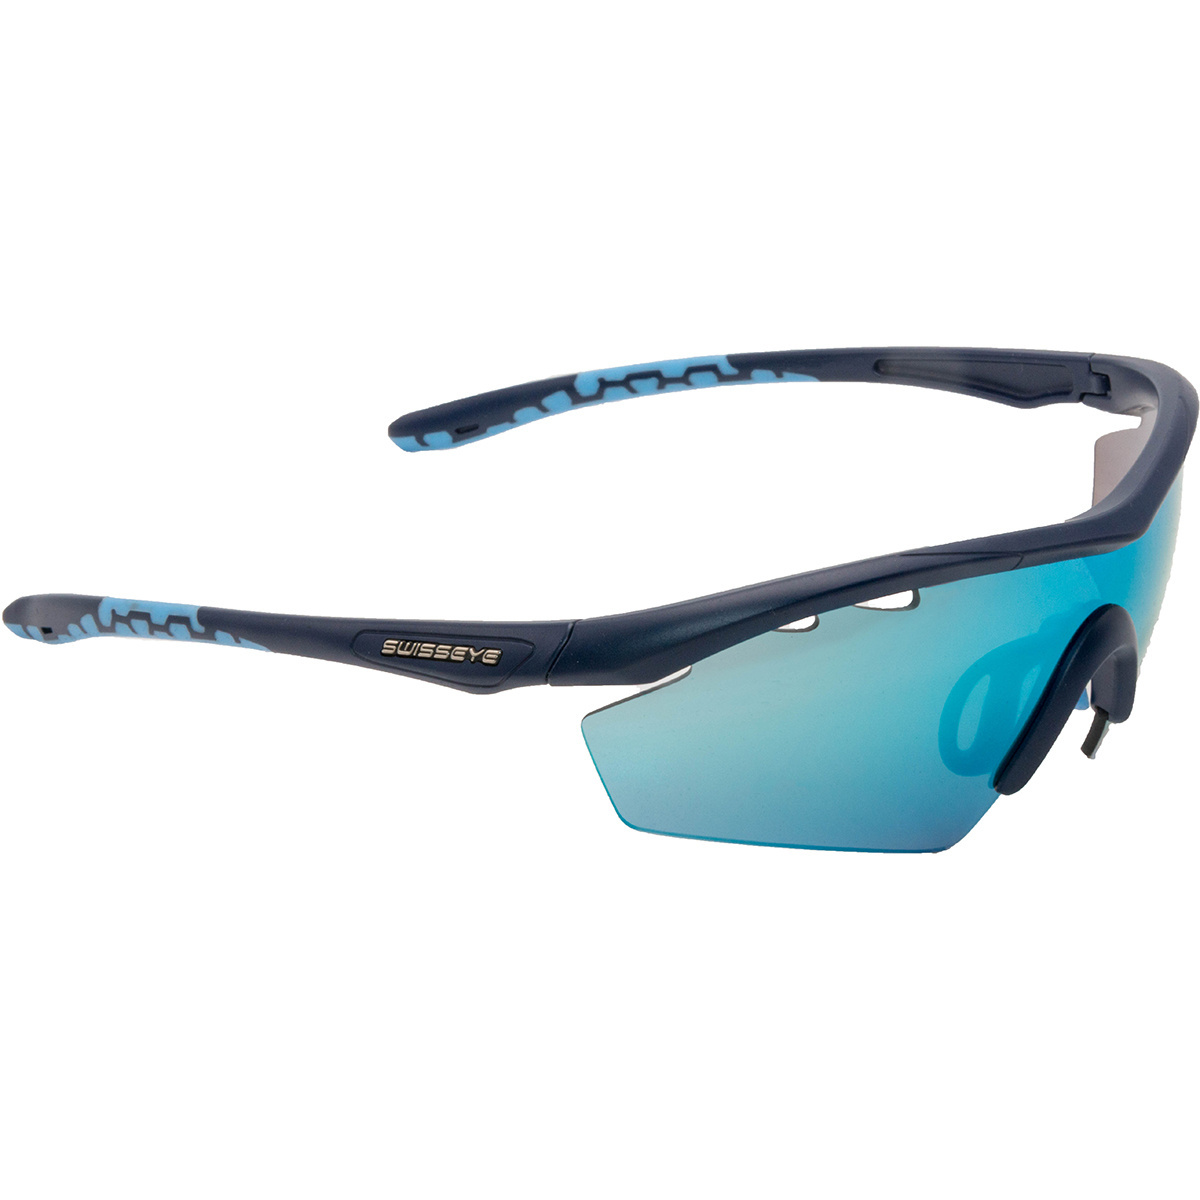 Swiss Eye Solena Sportbrille (Größe One Size, blau)